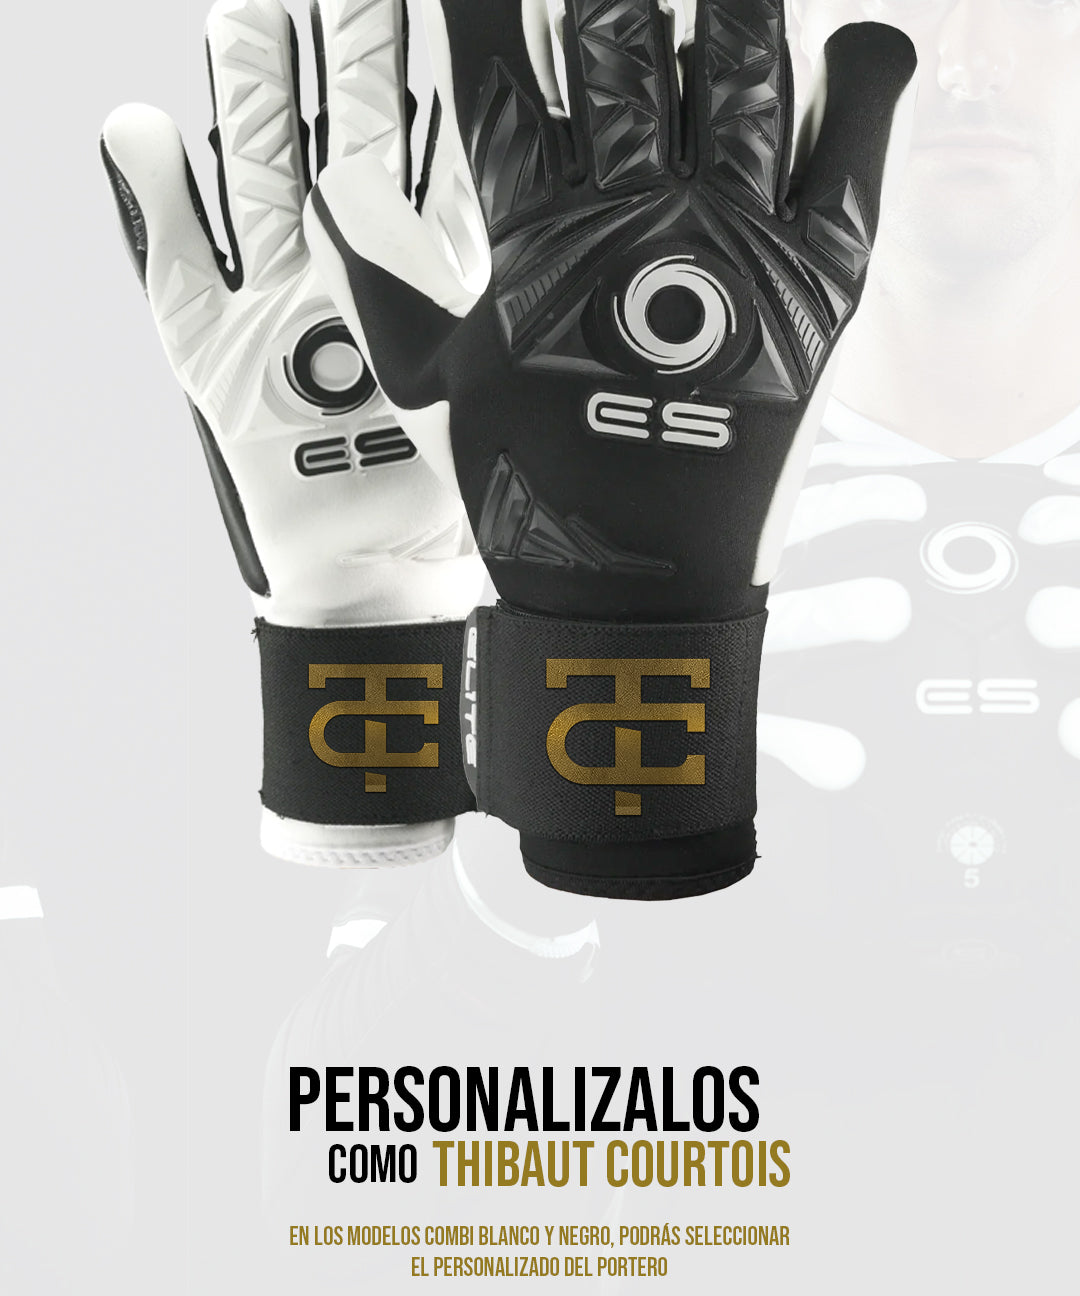 Elite Sport revolution 2 combi guantes de portero de futbol de thibaut courtois 2